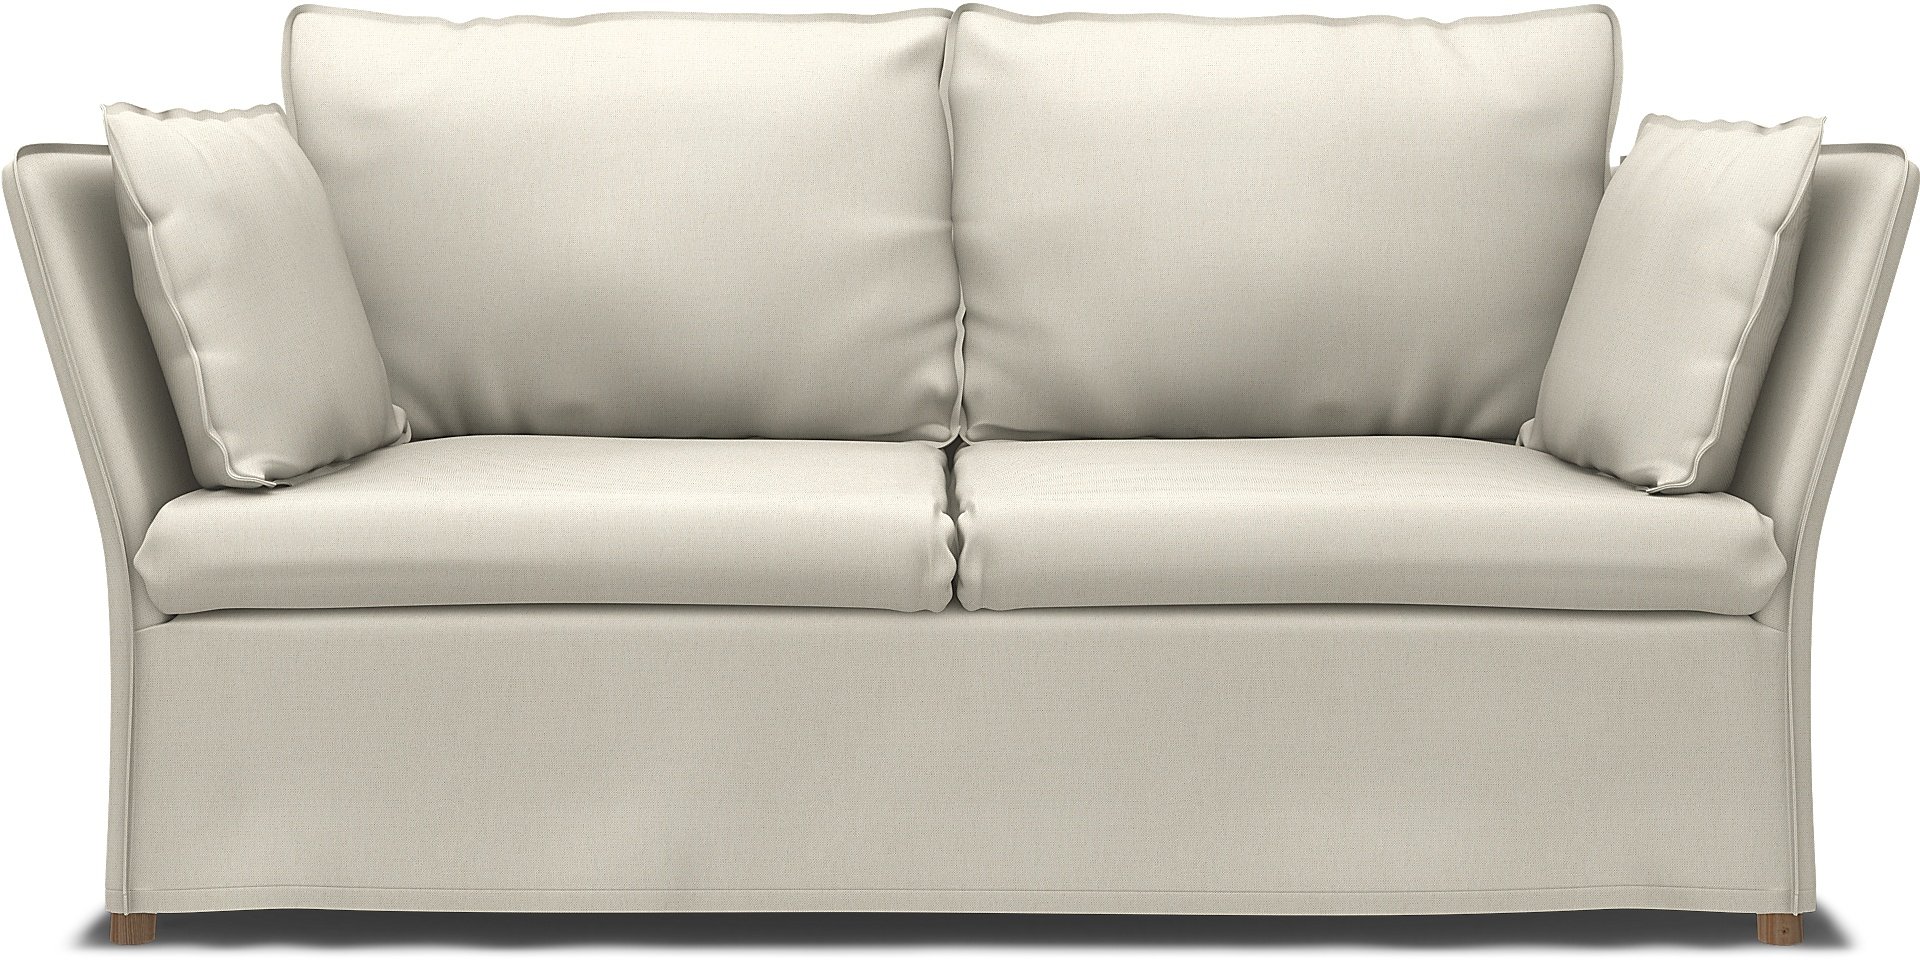 IKEA - Backsalen 2 seater sofa, Unbleached, Linen - Bemz